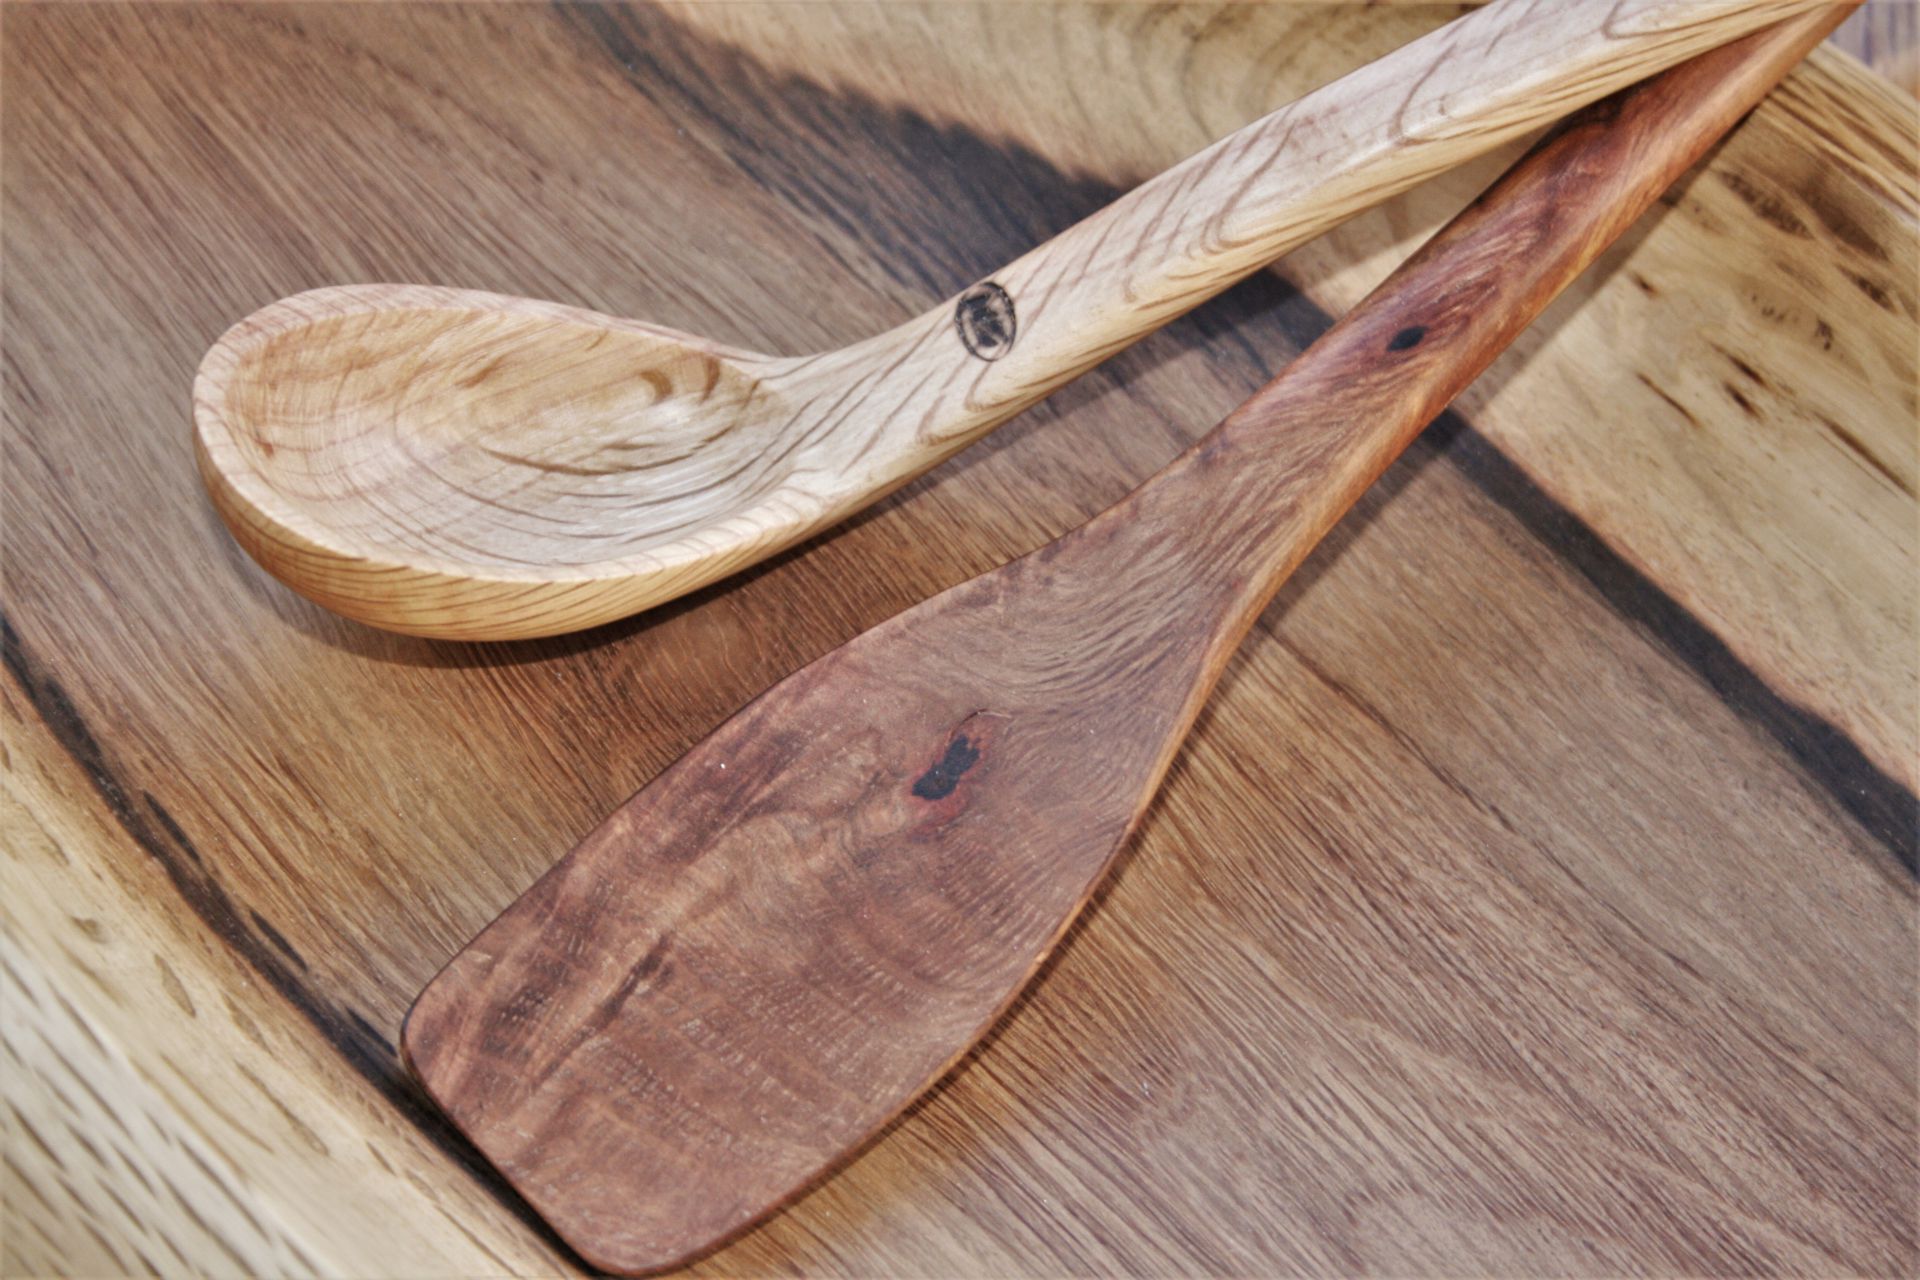 holm oak wood unique handmade ladles and spoons sanisio design